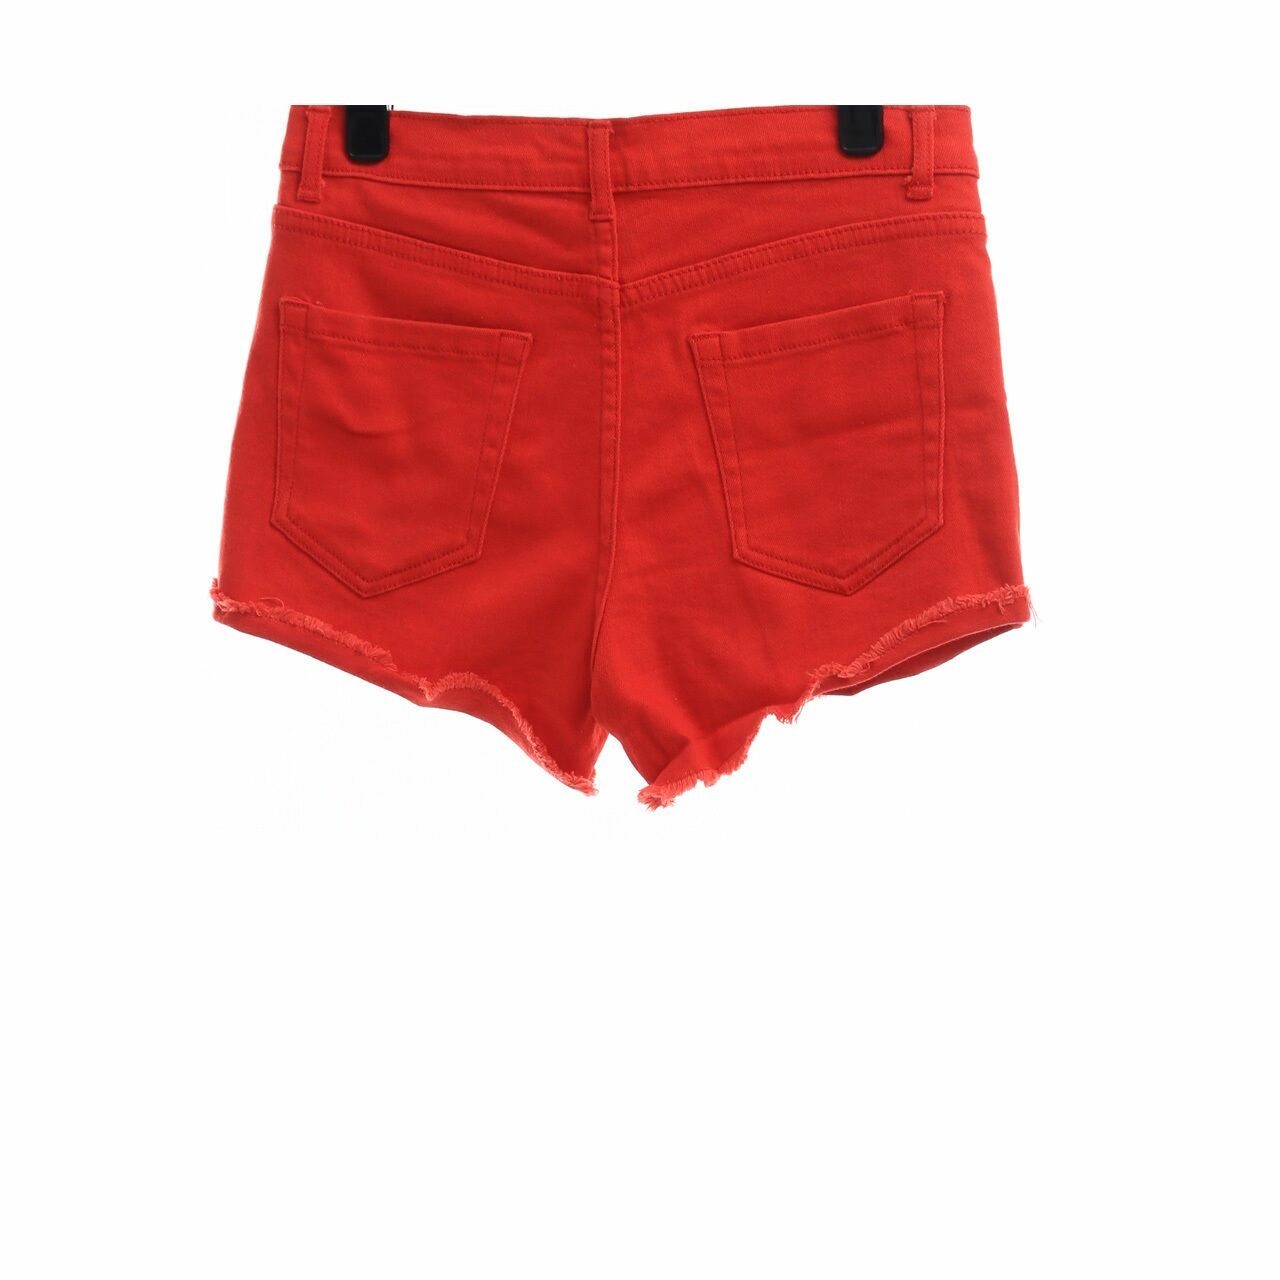 Forever 21 Red Studded Unfinished Short Pants